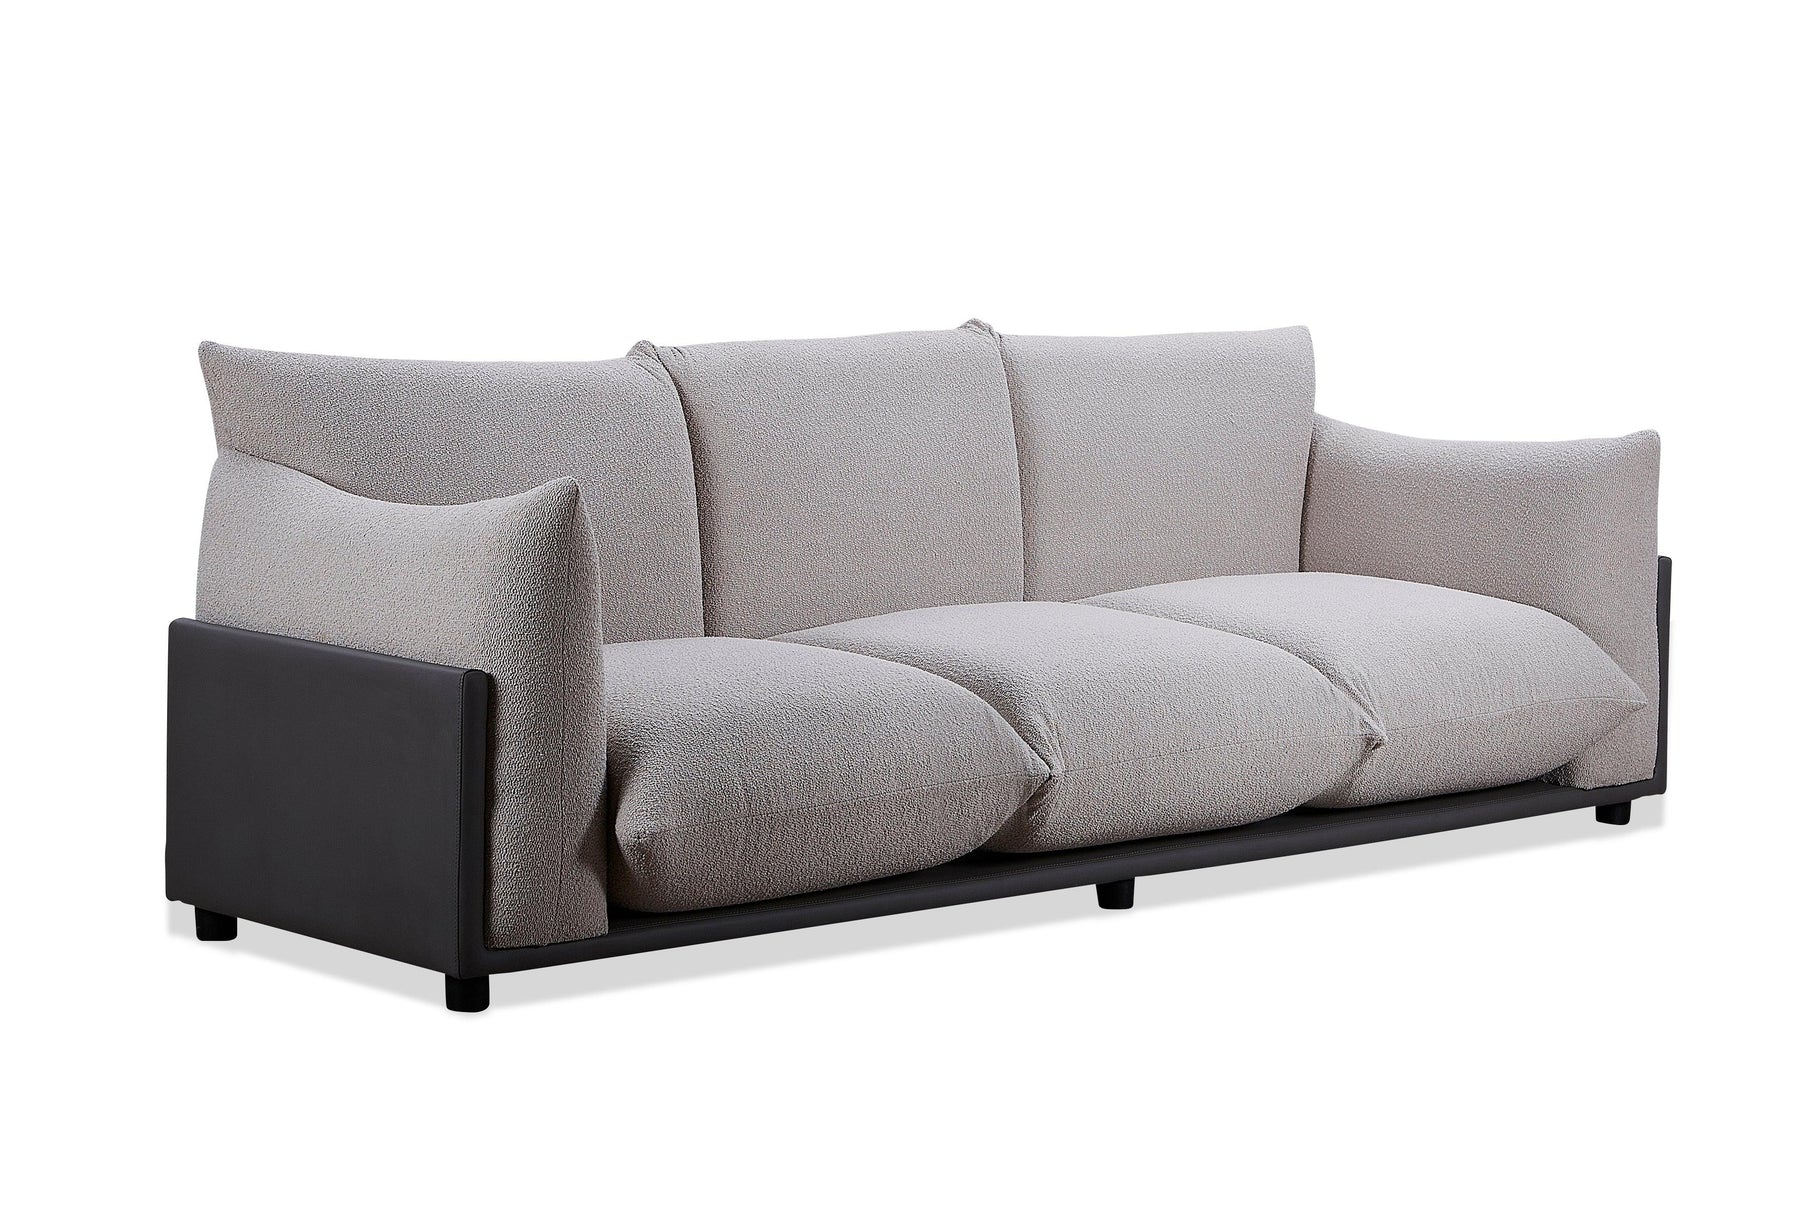 The Puff 3 Seater Boucle Sofa - Dove Grey - BUBULAND HOME